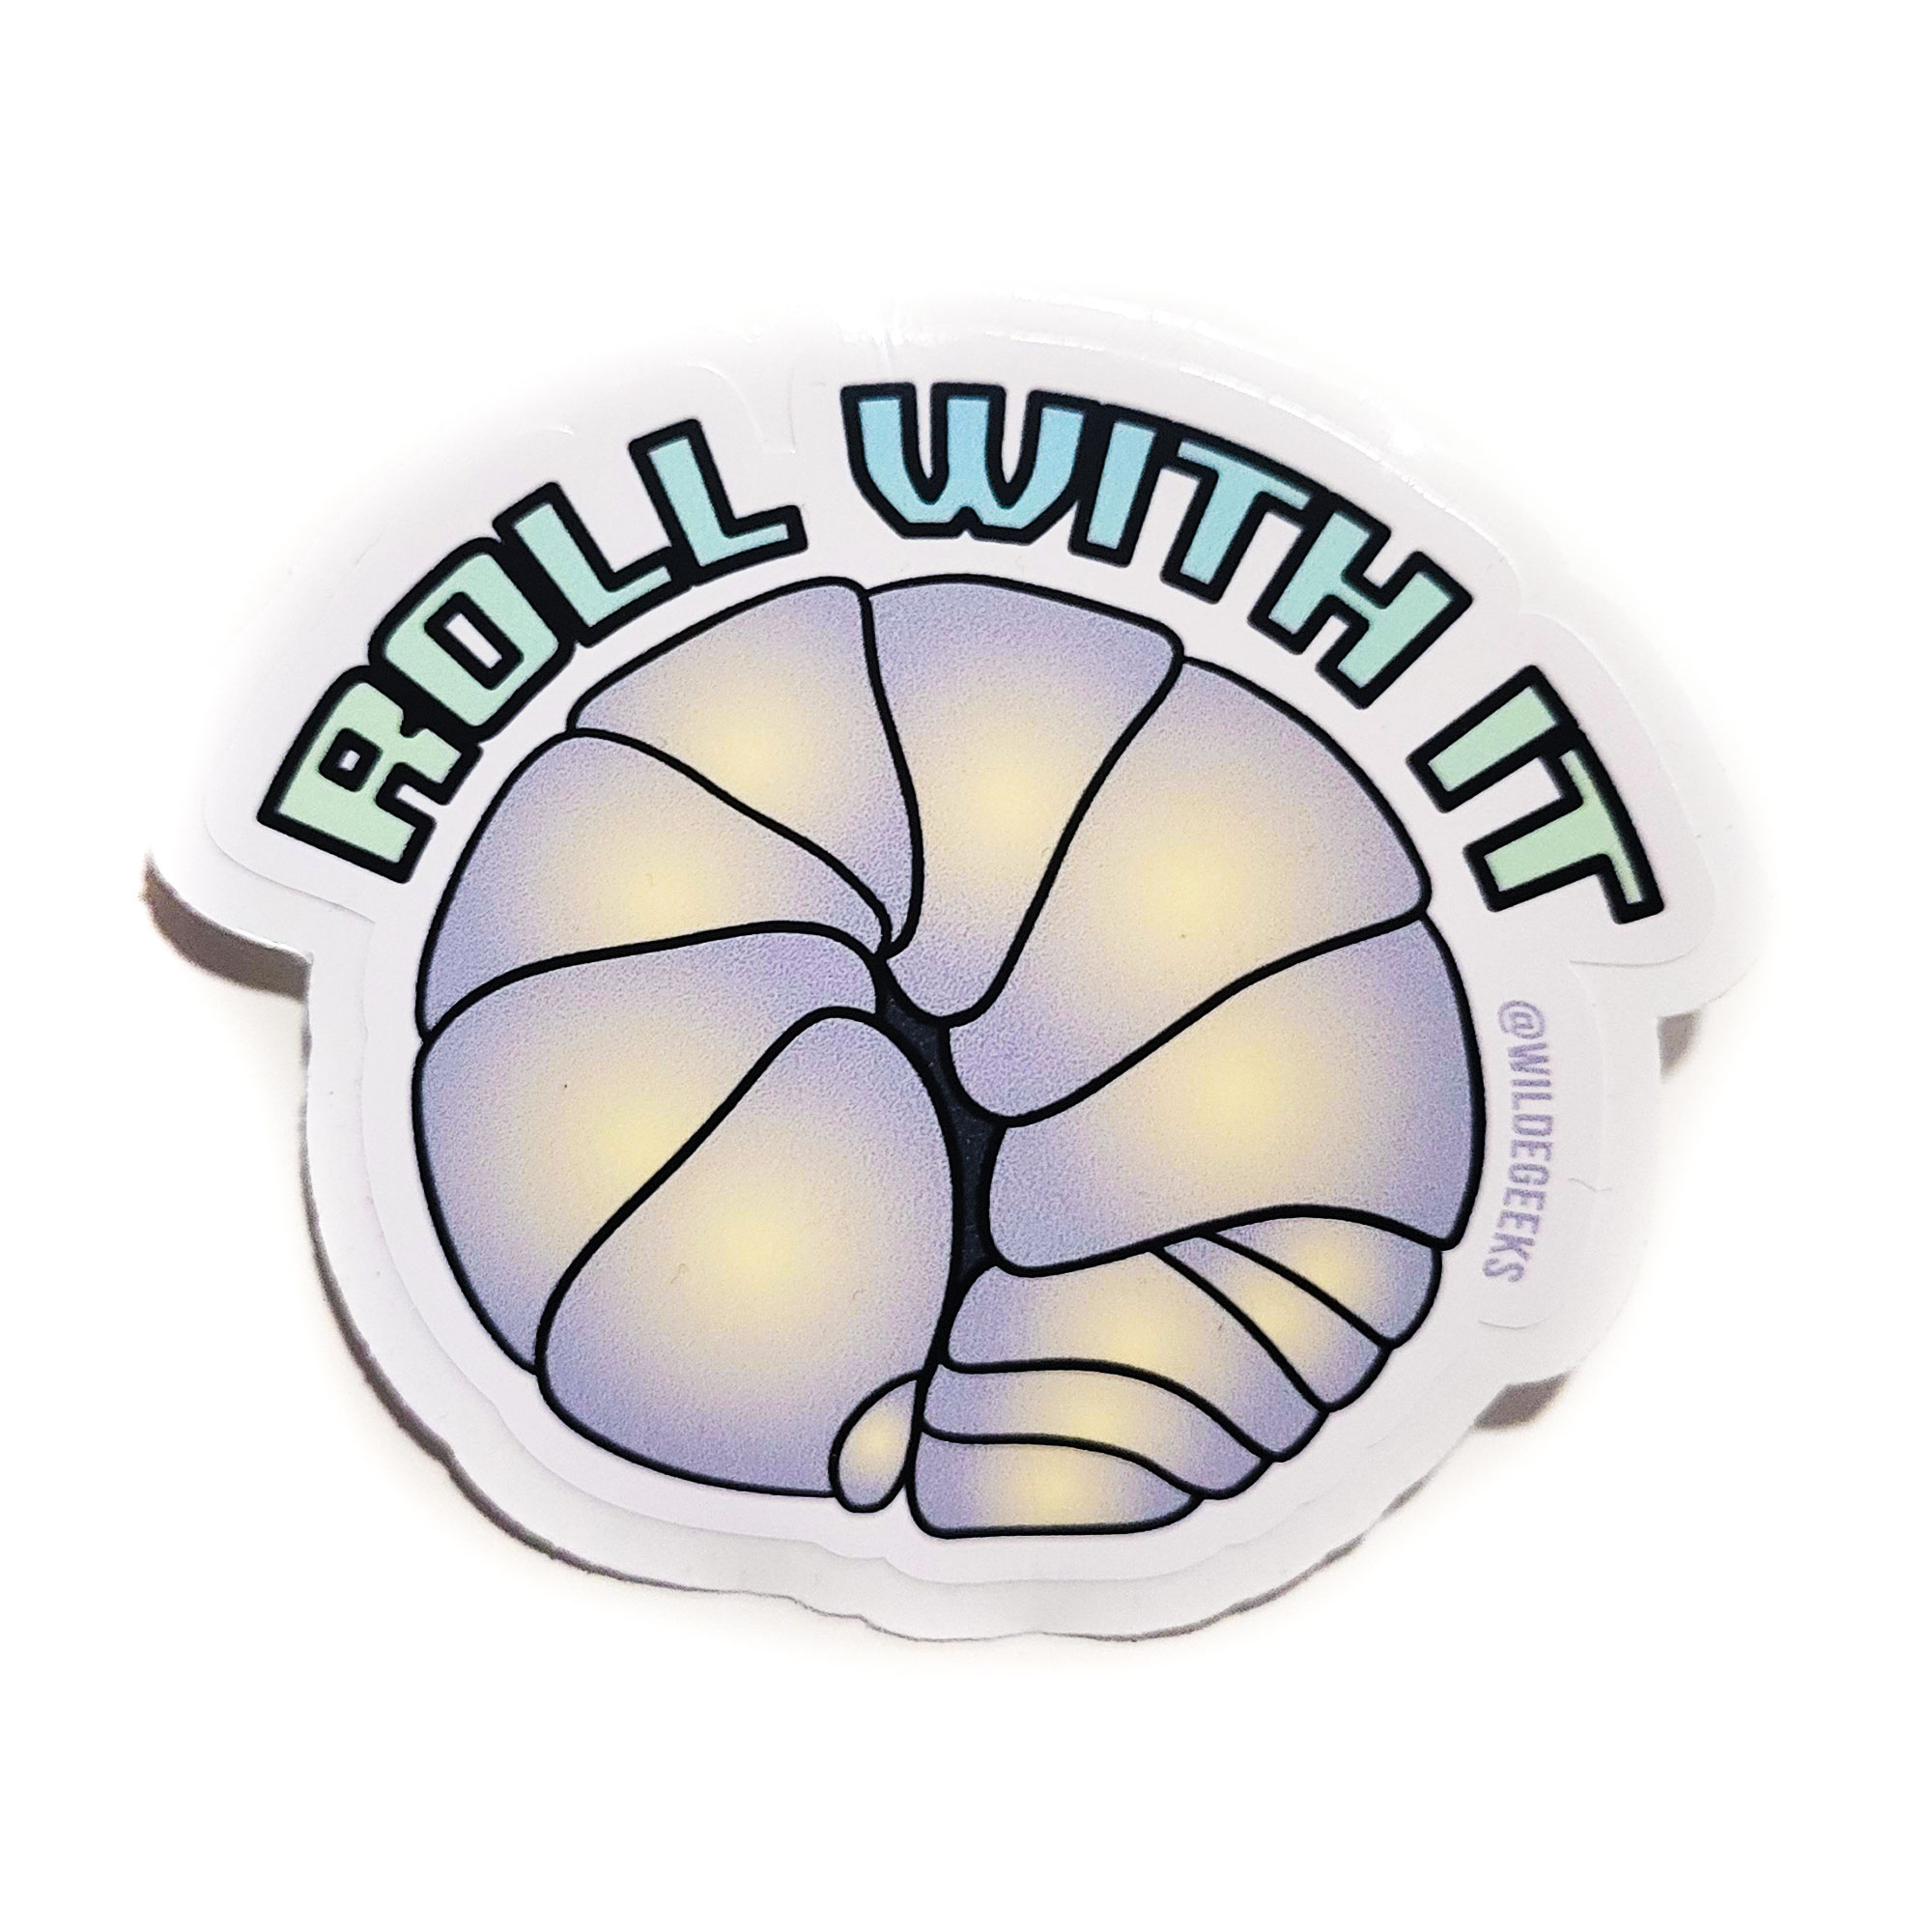 Roll with It Sticker in Pastel by Wilde Designs